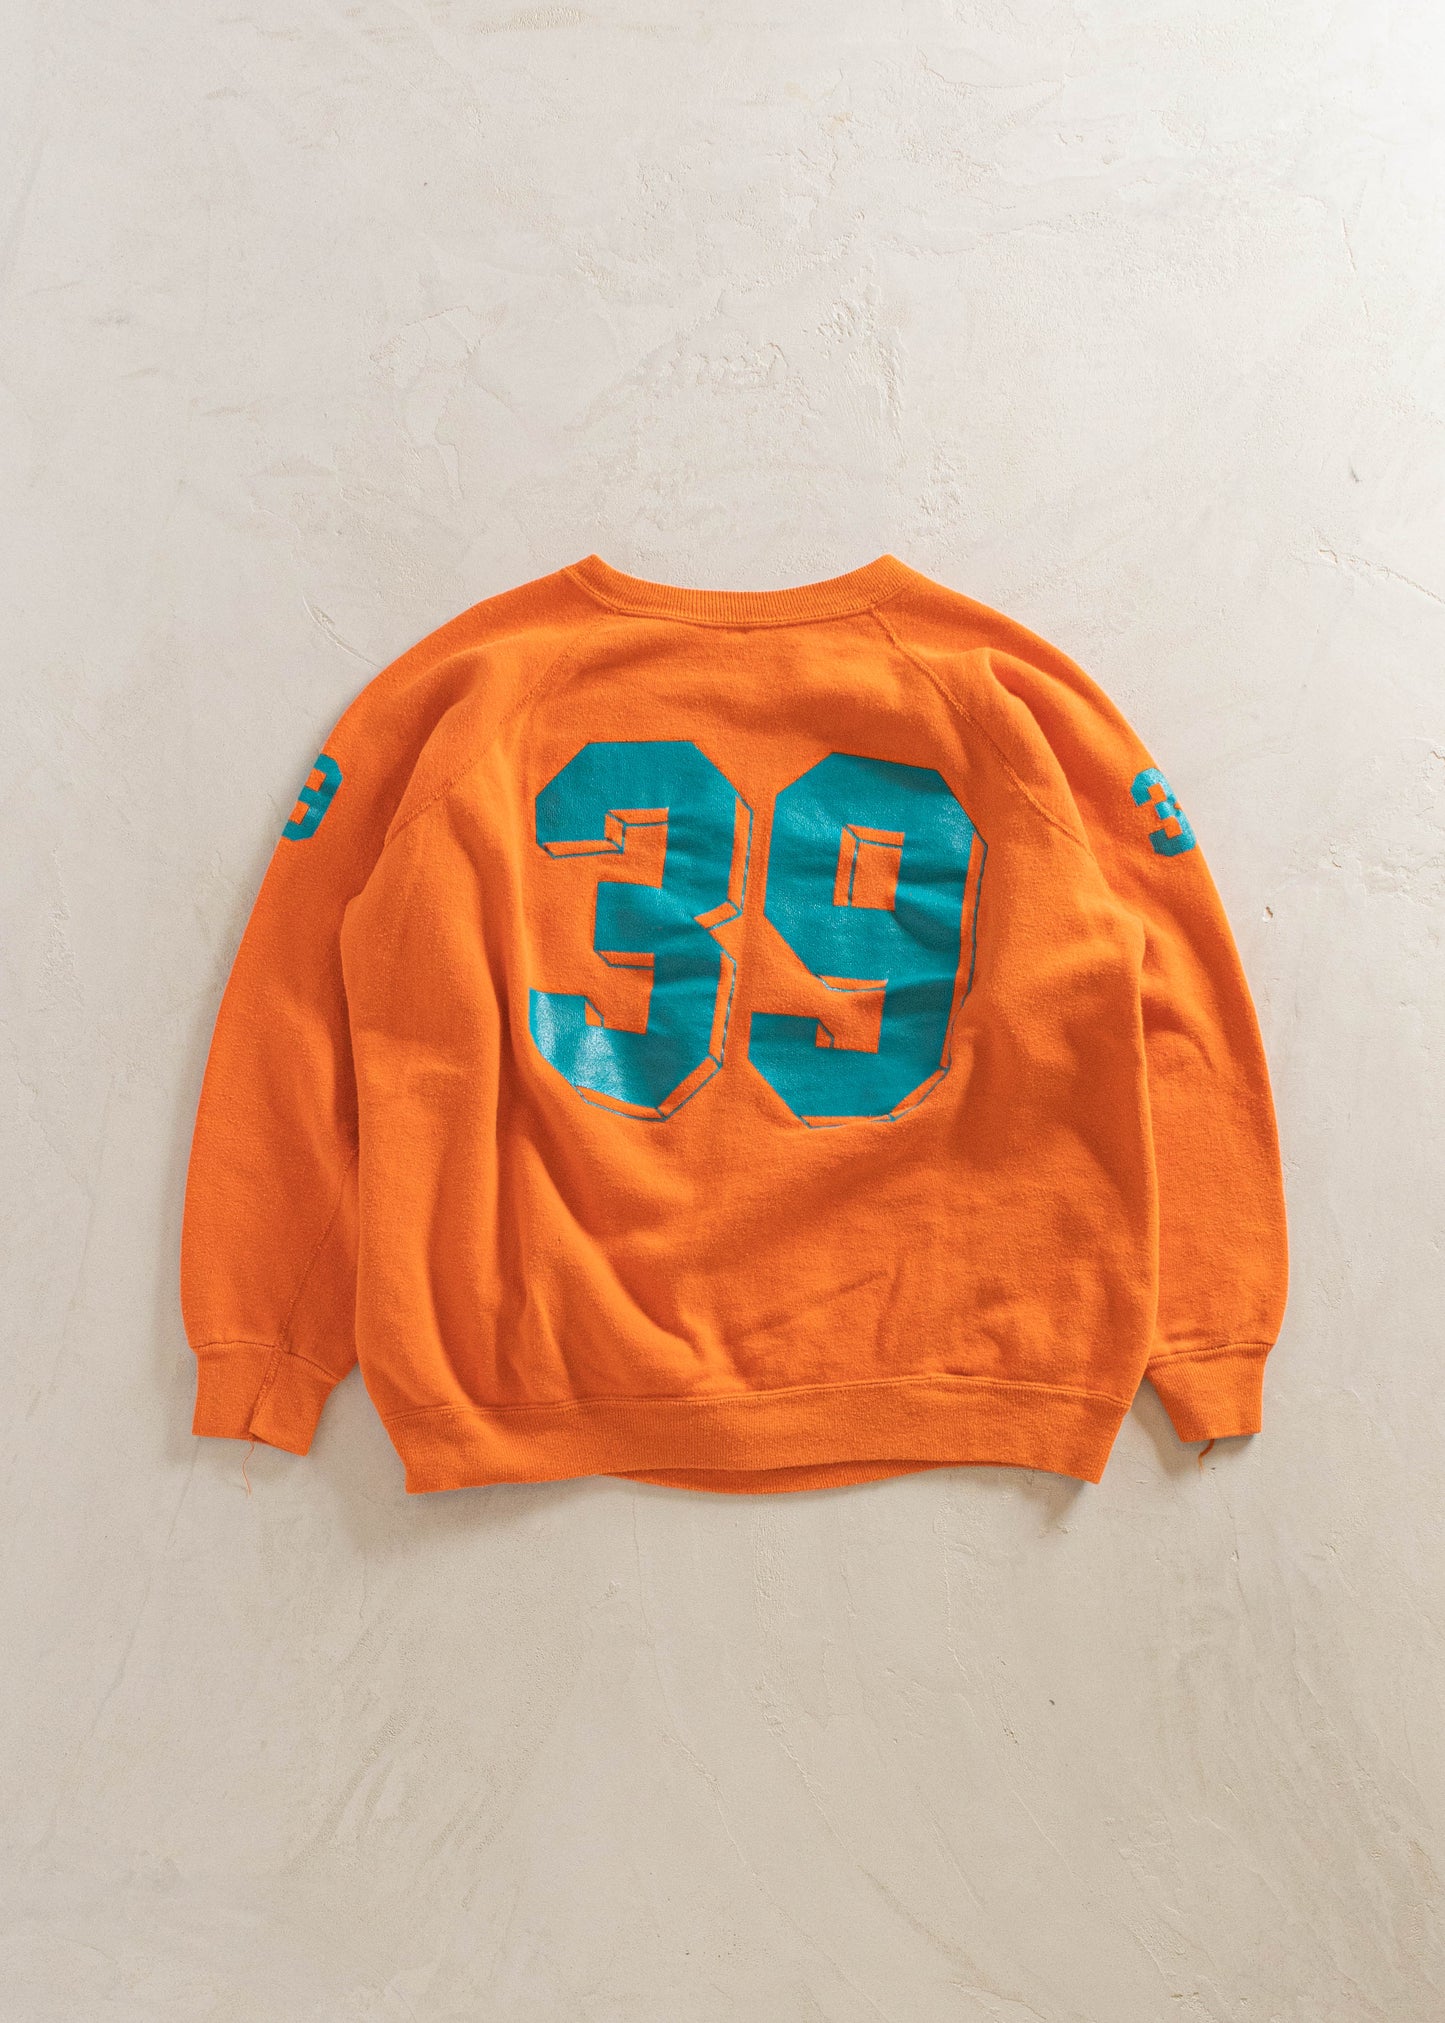 1980s Number 39 Sport Sweatshirt Size M/L